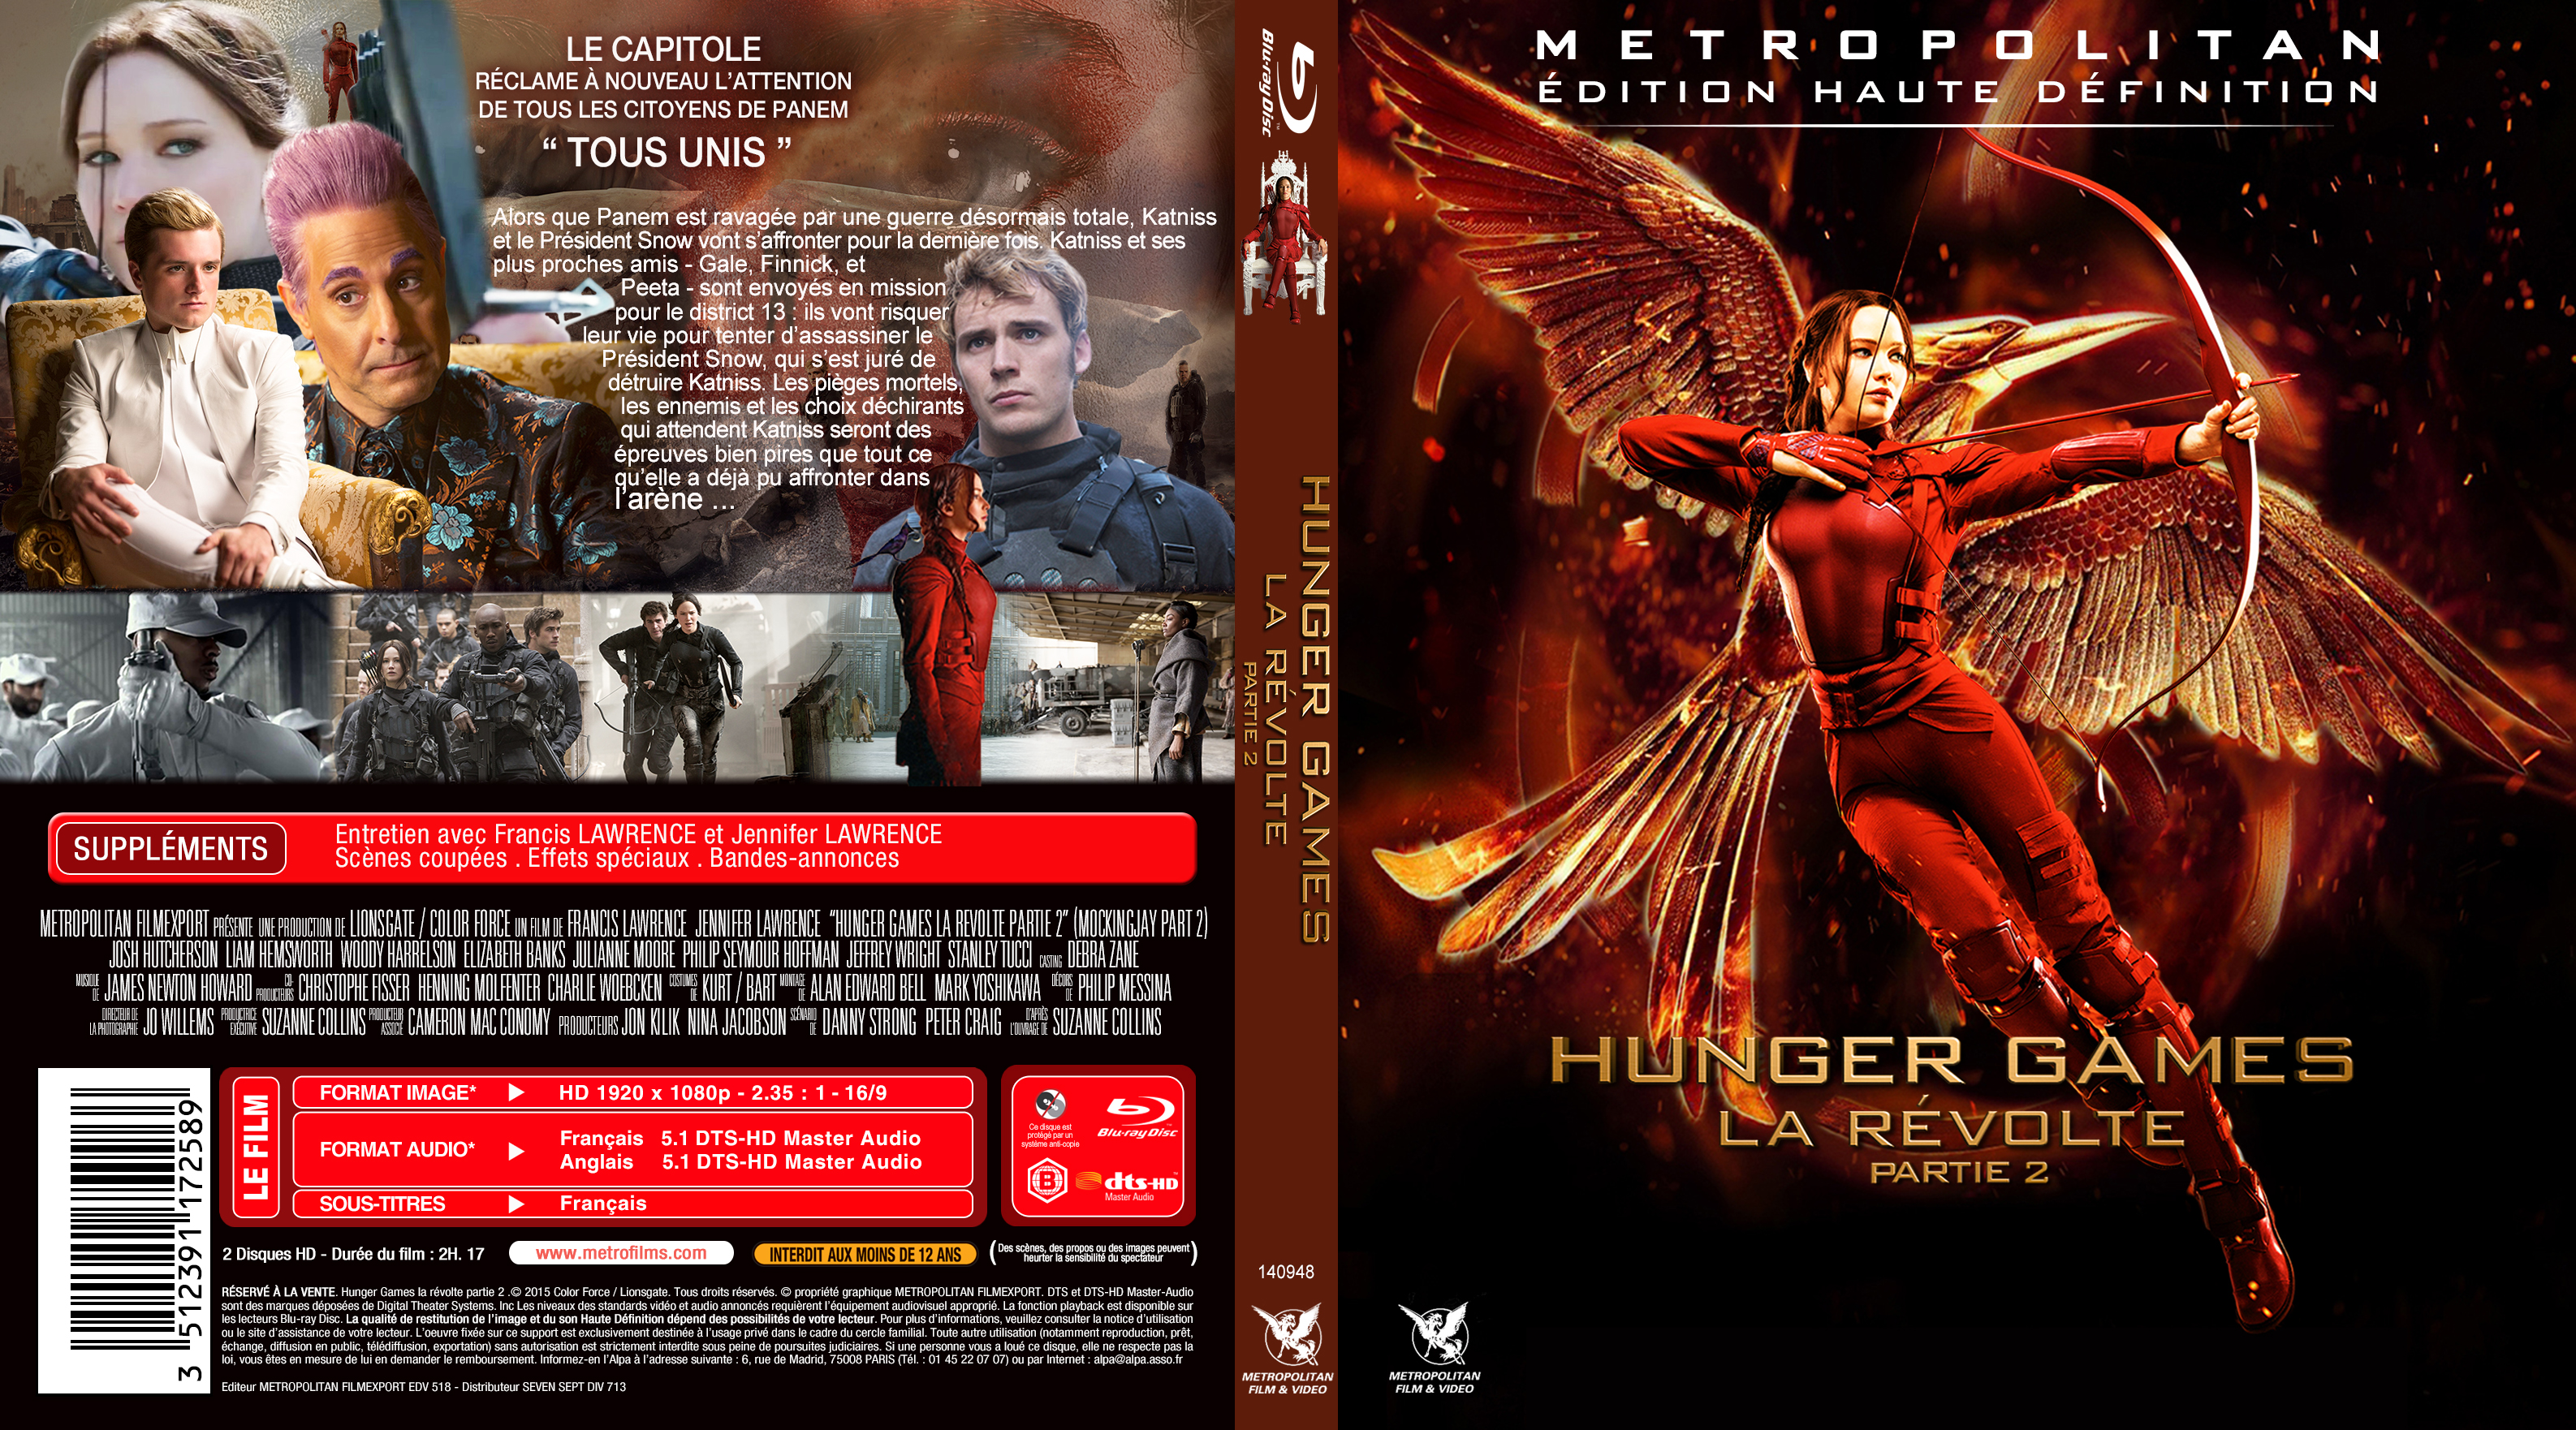 Jaquette DVD Hunger Games La Rvolte : Partie 2 custom (BLU-RAY)